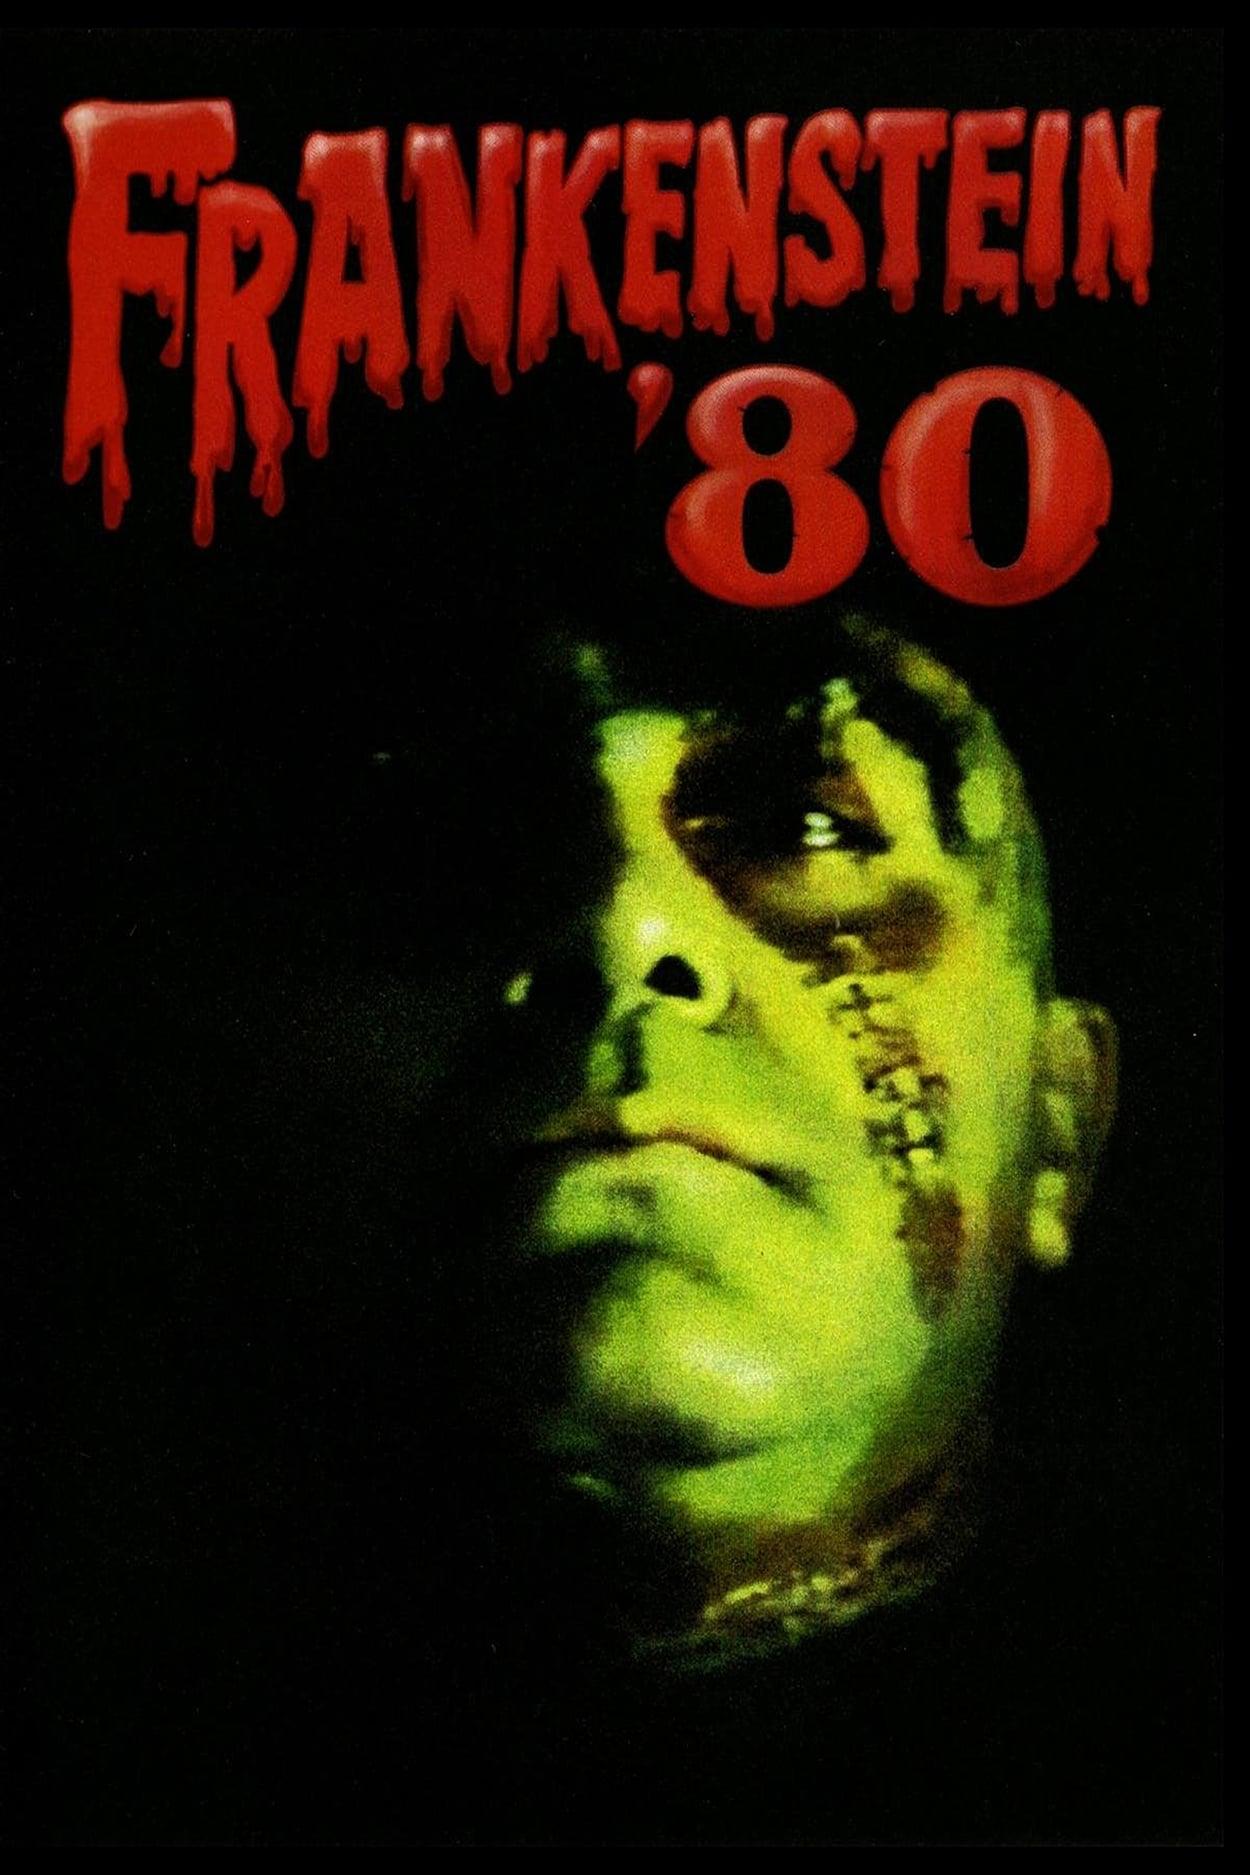 Frankenstein '80 poster